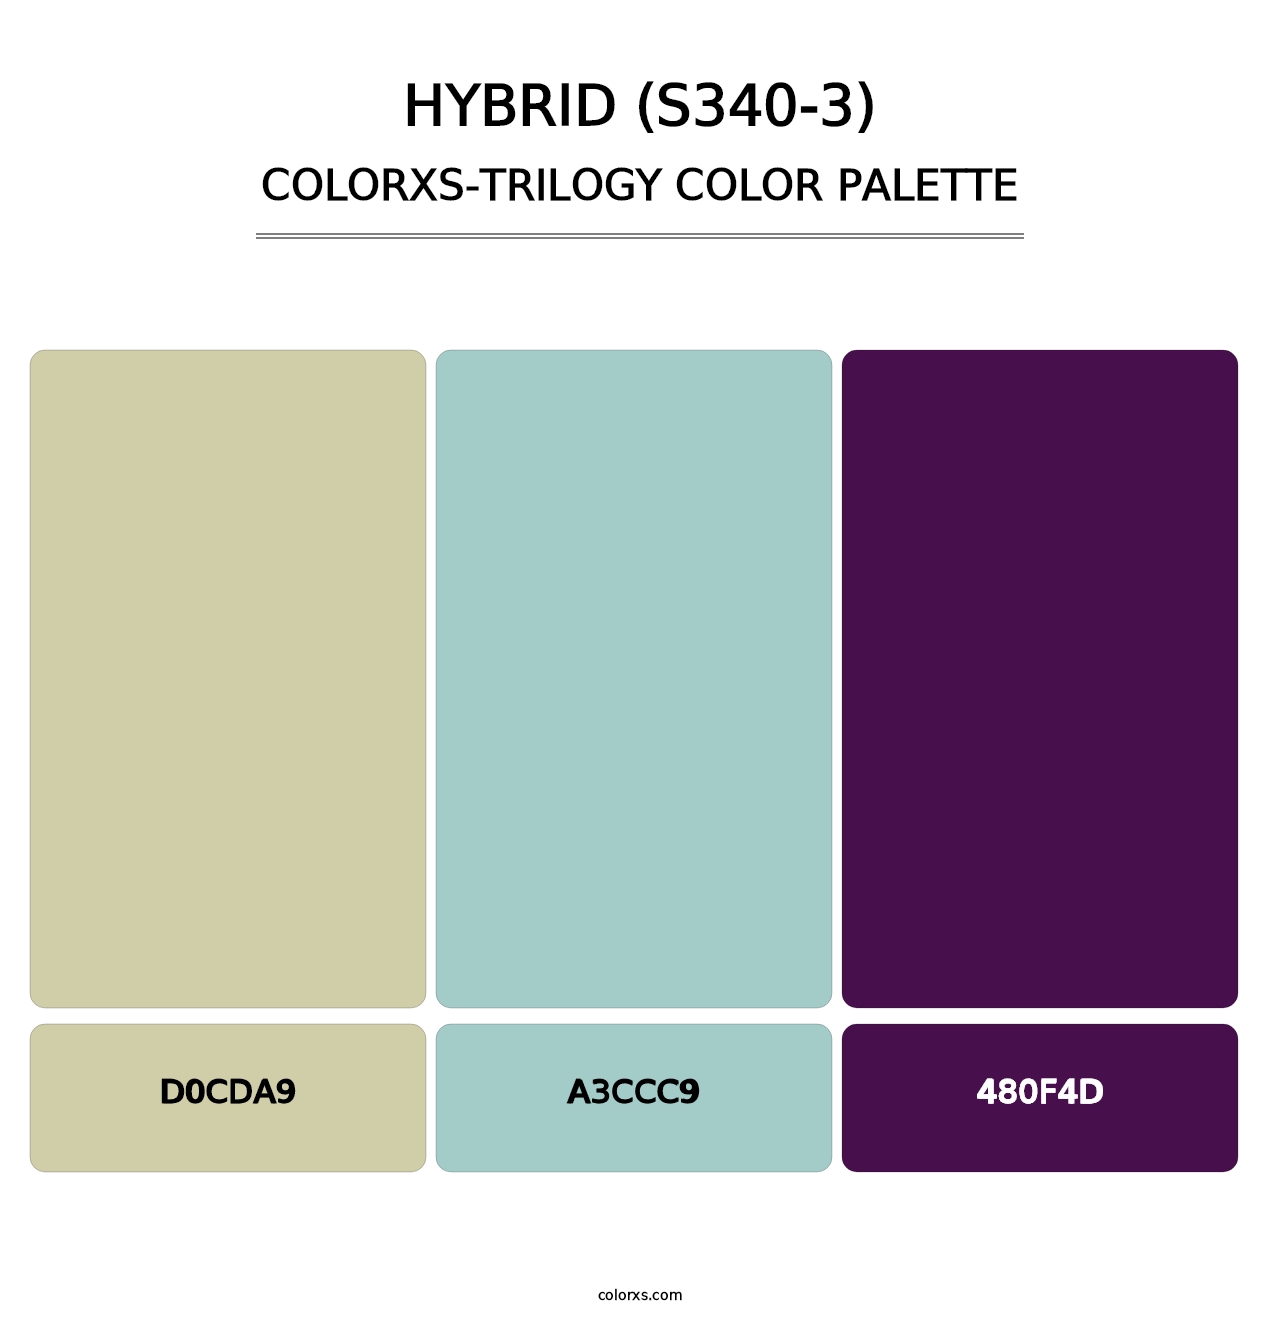 Hybrid (S340-3) - Colorxs Trilogy Palette